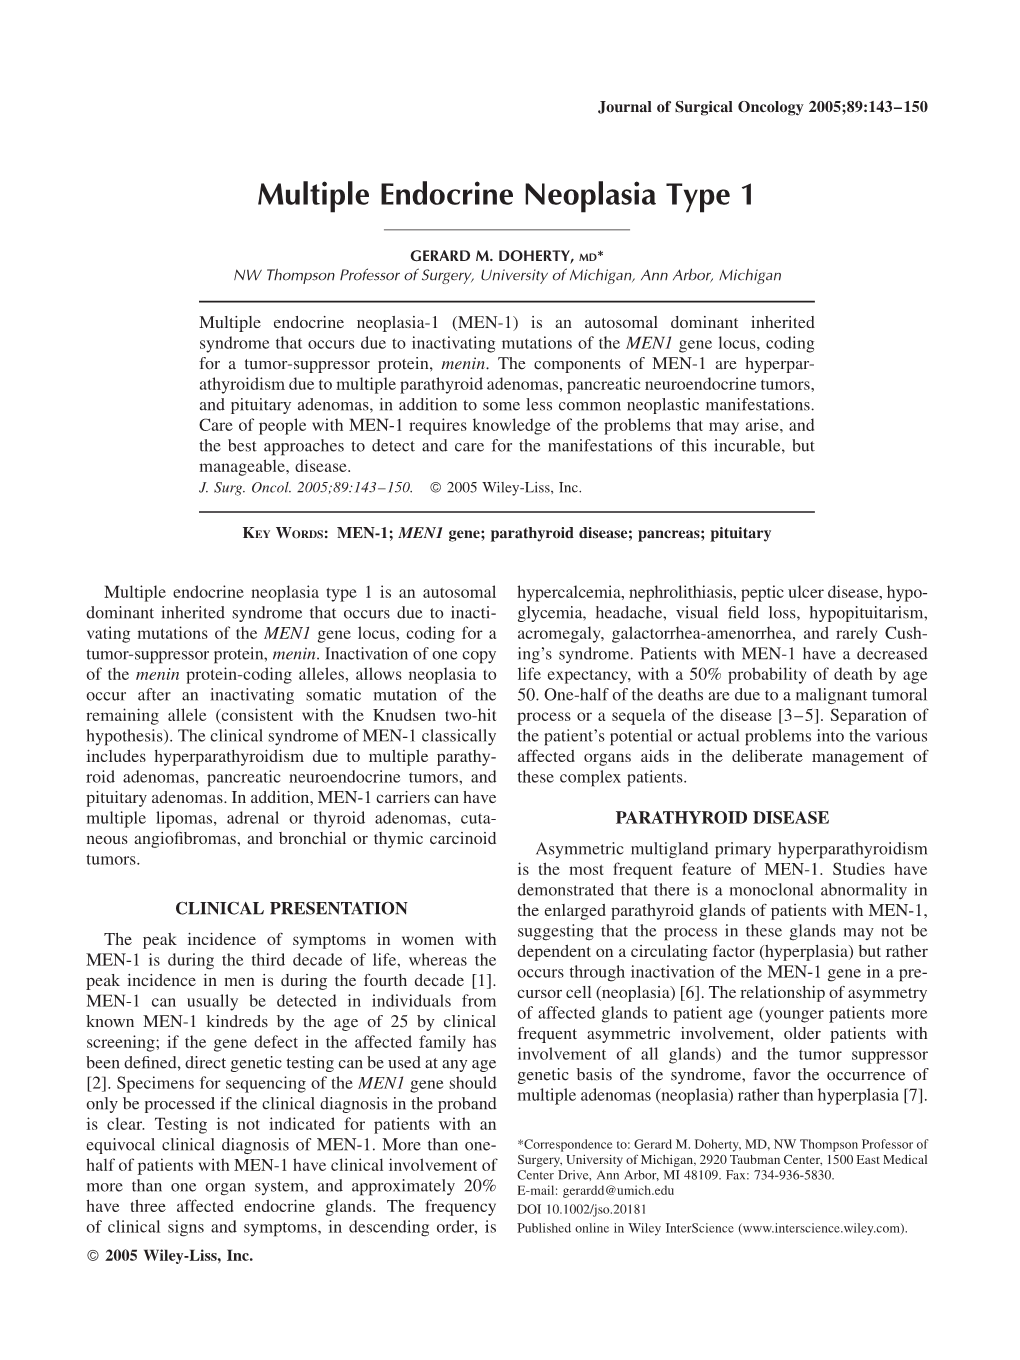 Multiple Endocrine Neoplasia Type 1